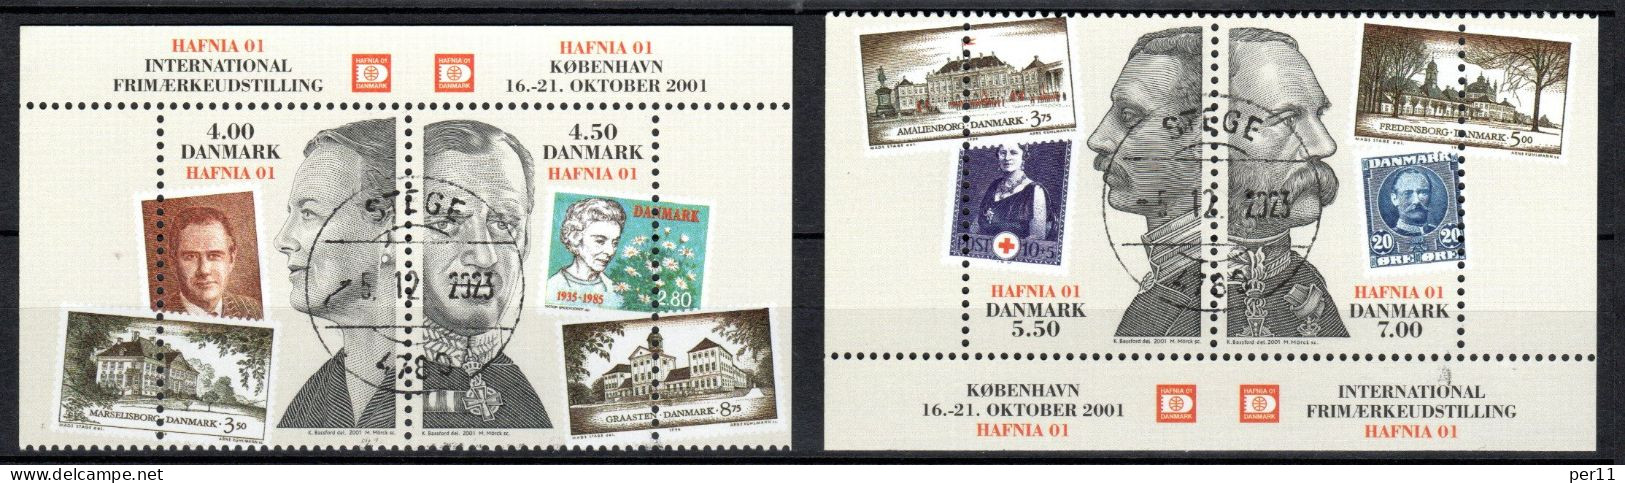 2001 Hafnia01 Stamp Excibition  (bl10) - Gebruikt